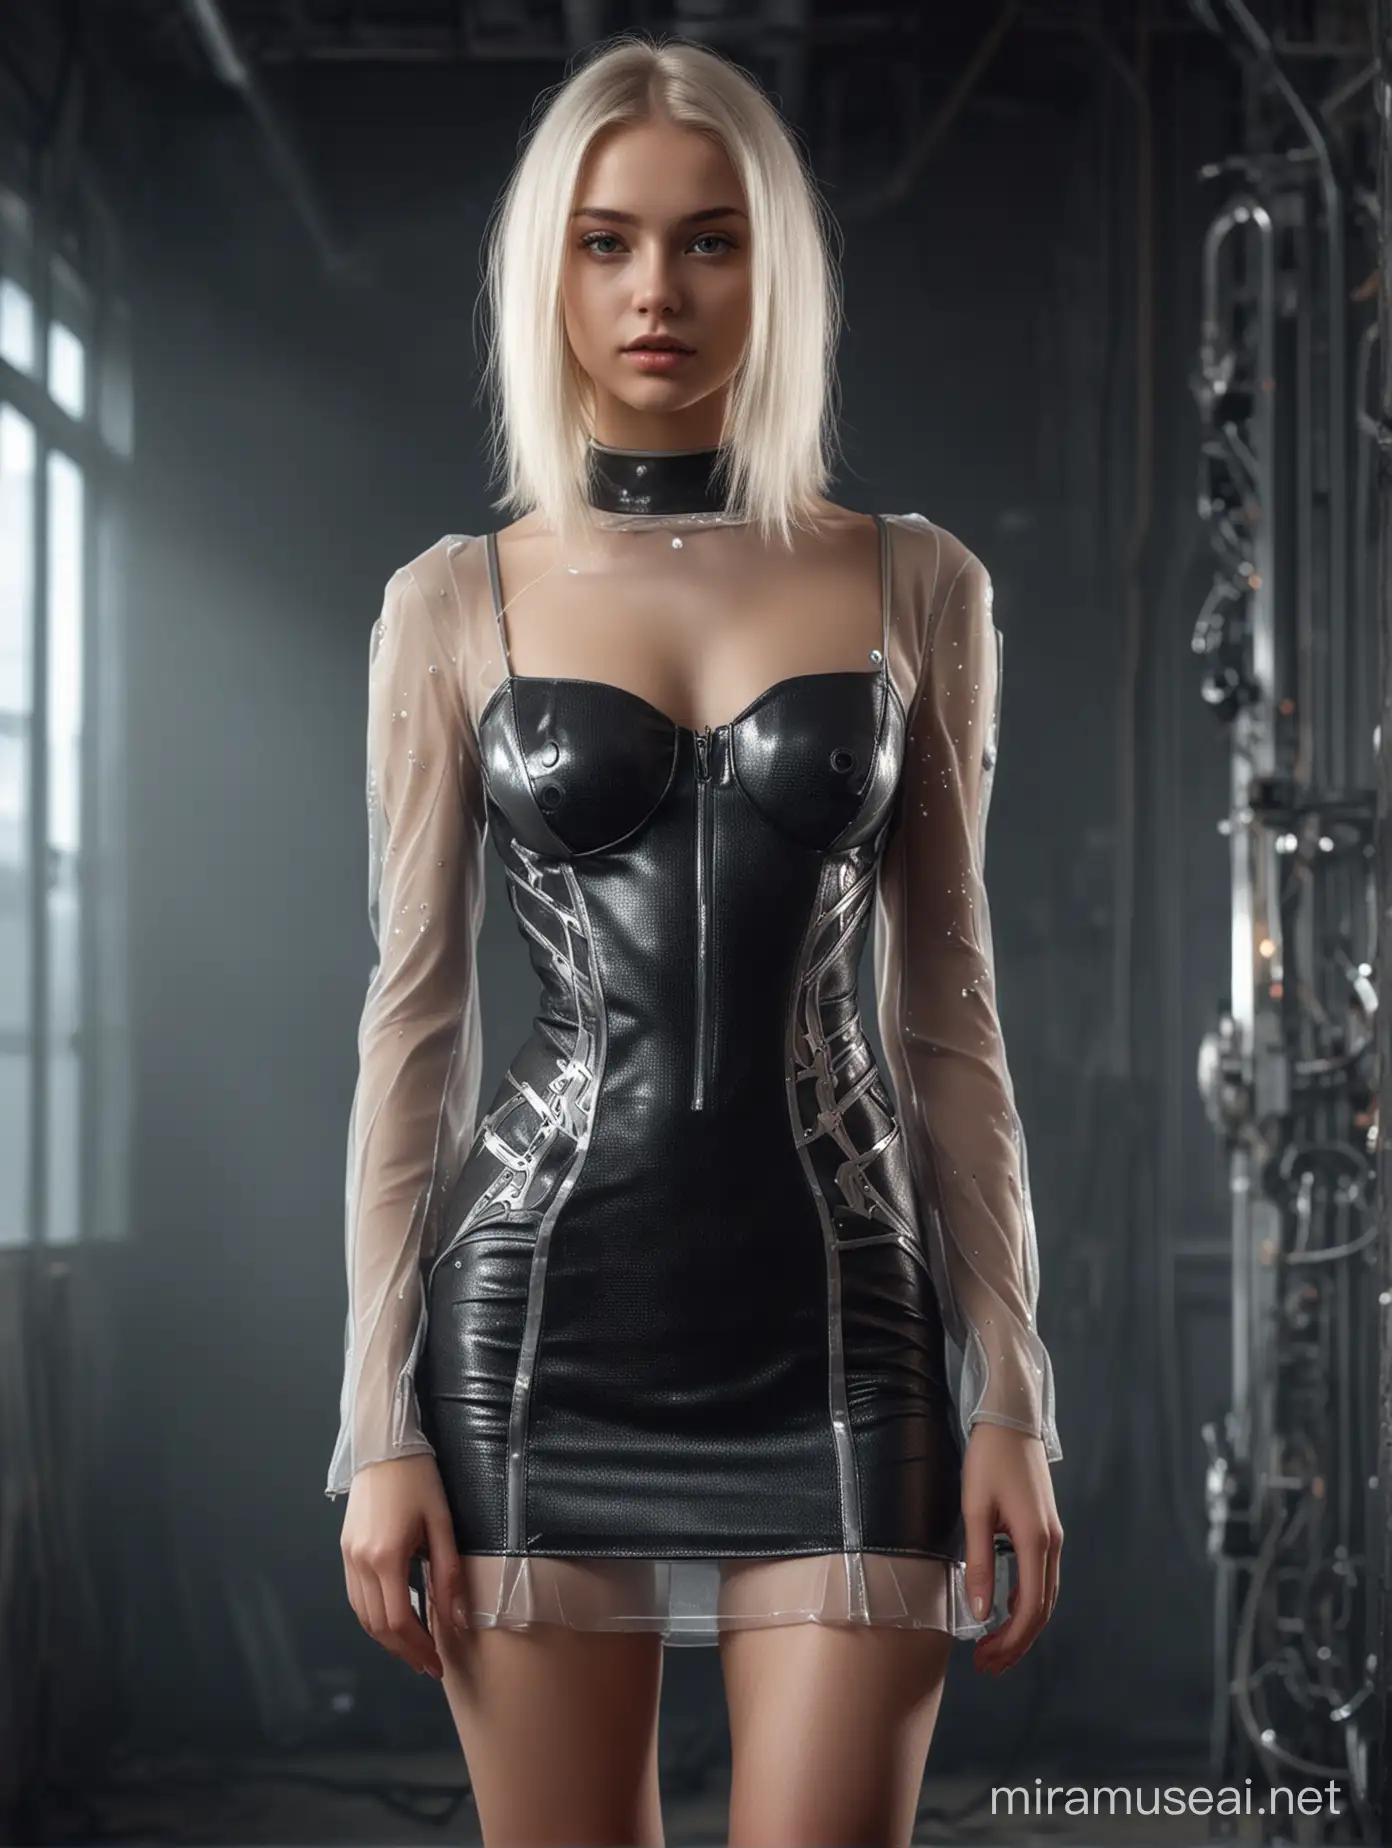 Stunning Russian Model in SciFi Sheer Dress Captivating 4K Portrait